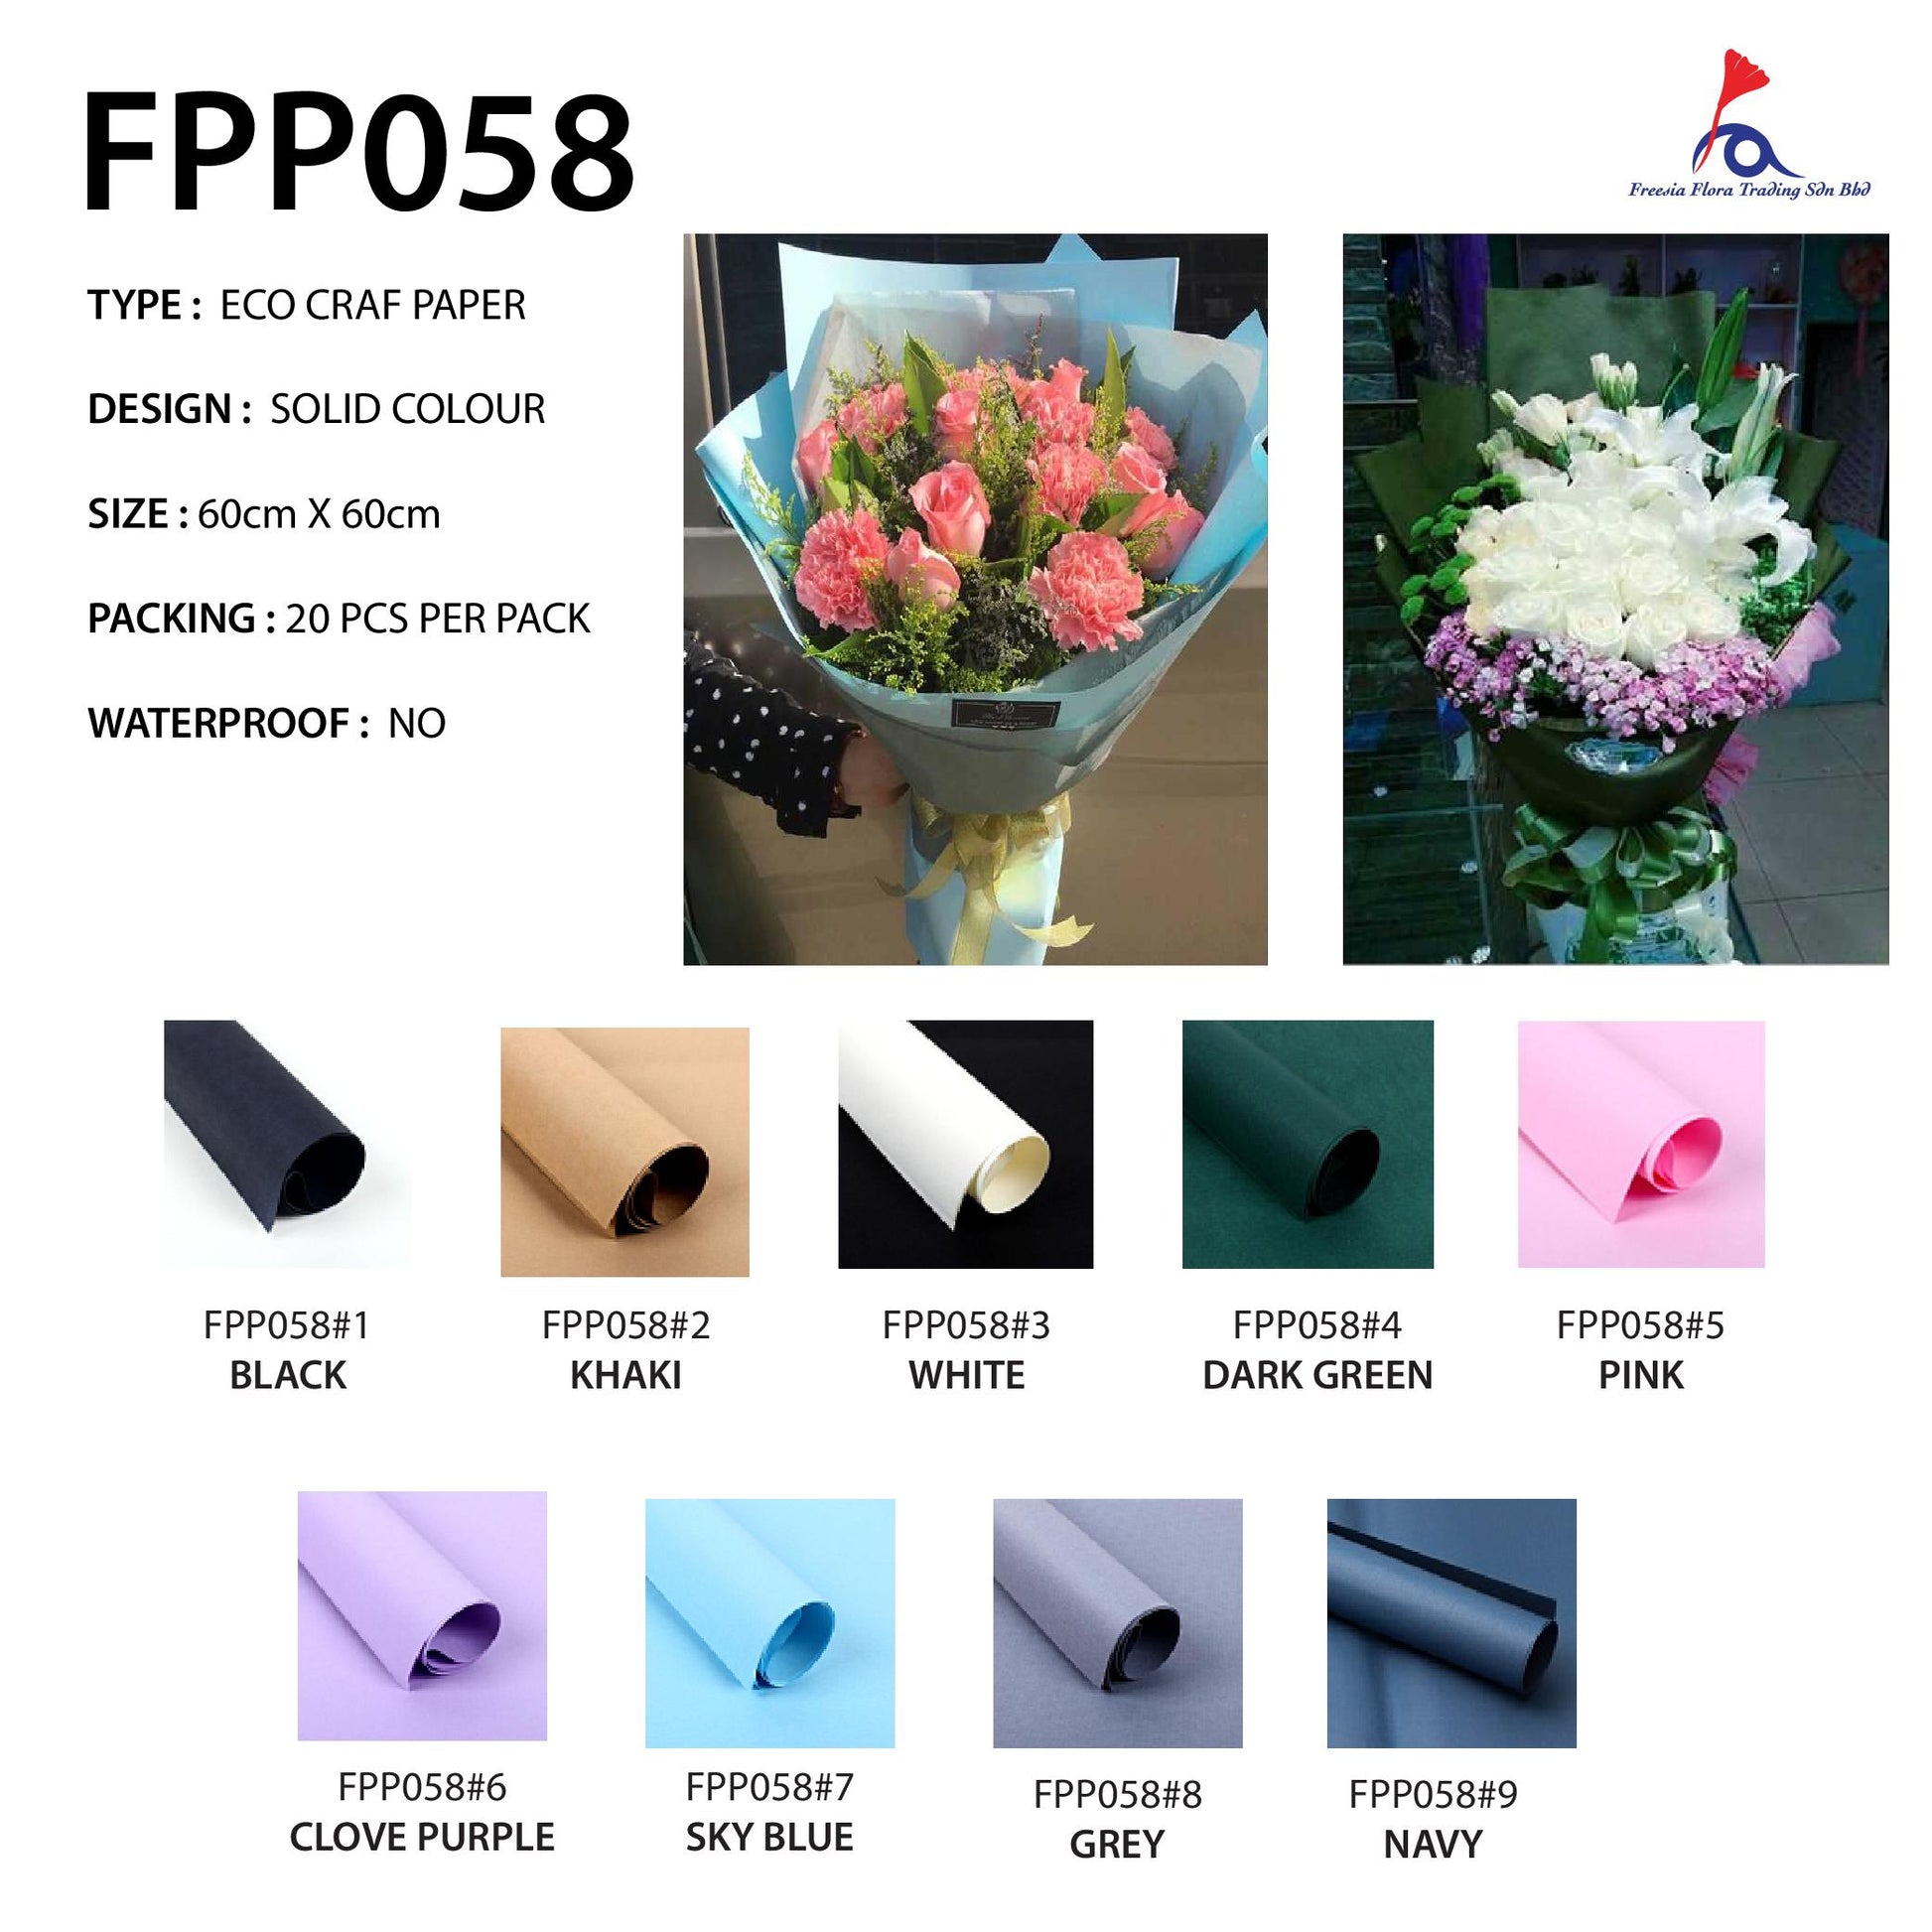 FPP058 ECO CRAFT PAPER - Freesia